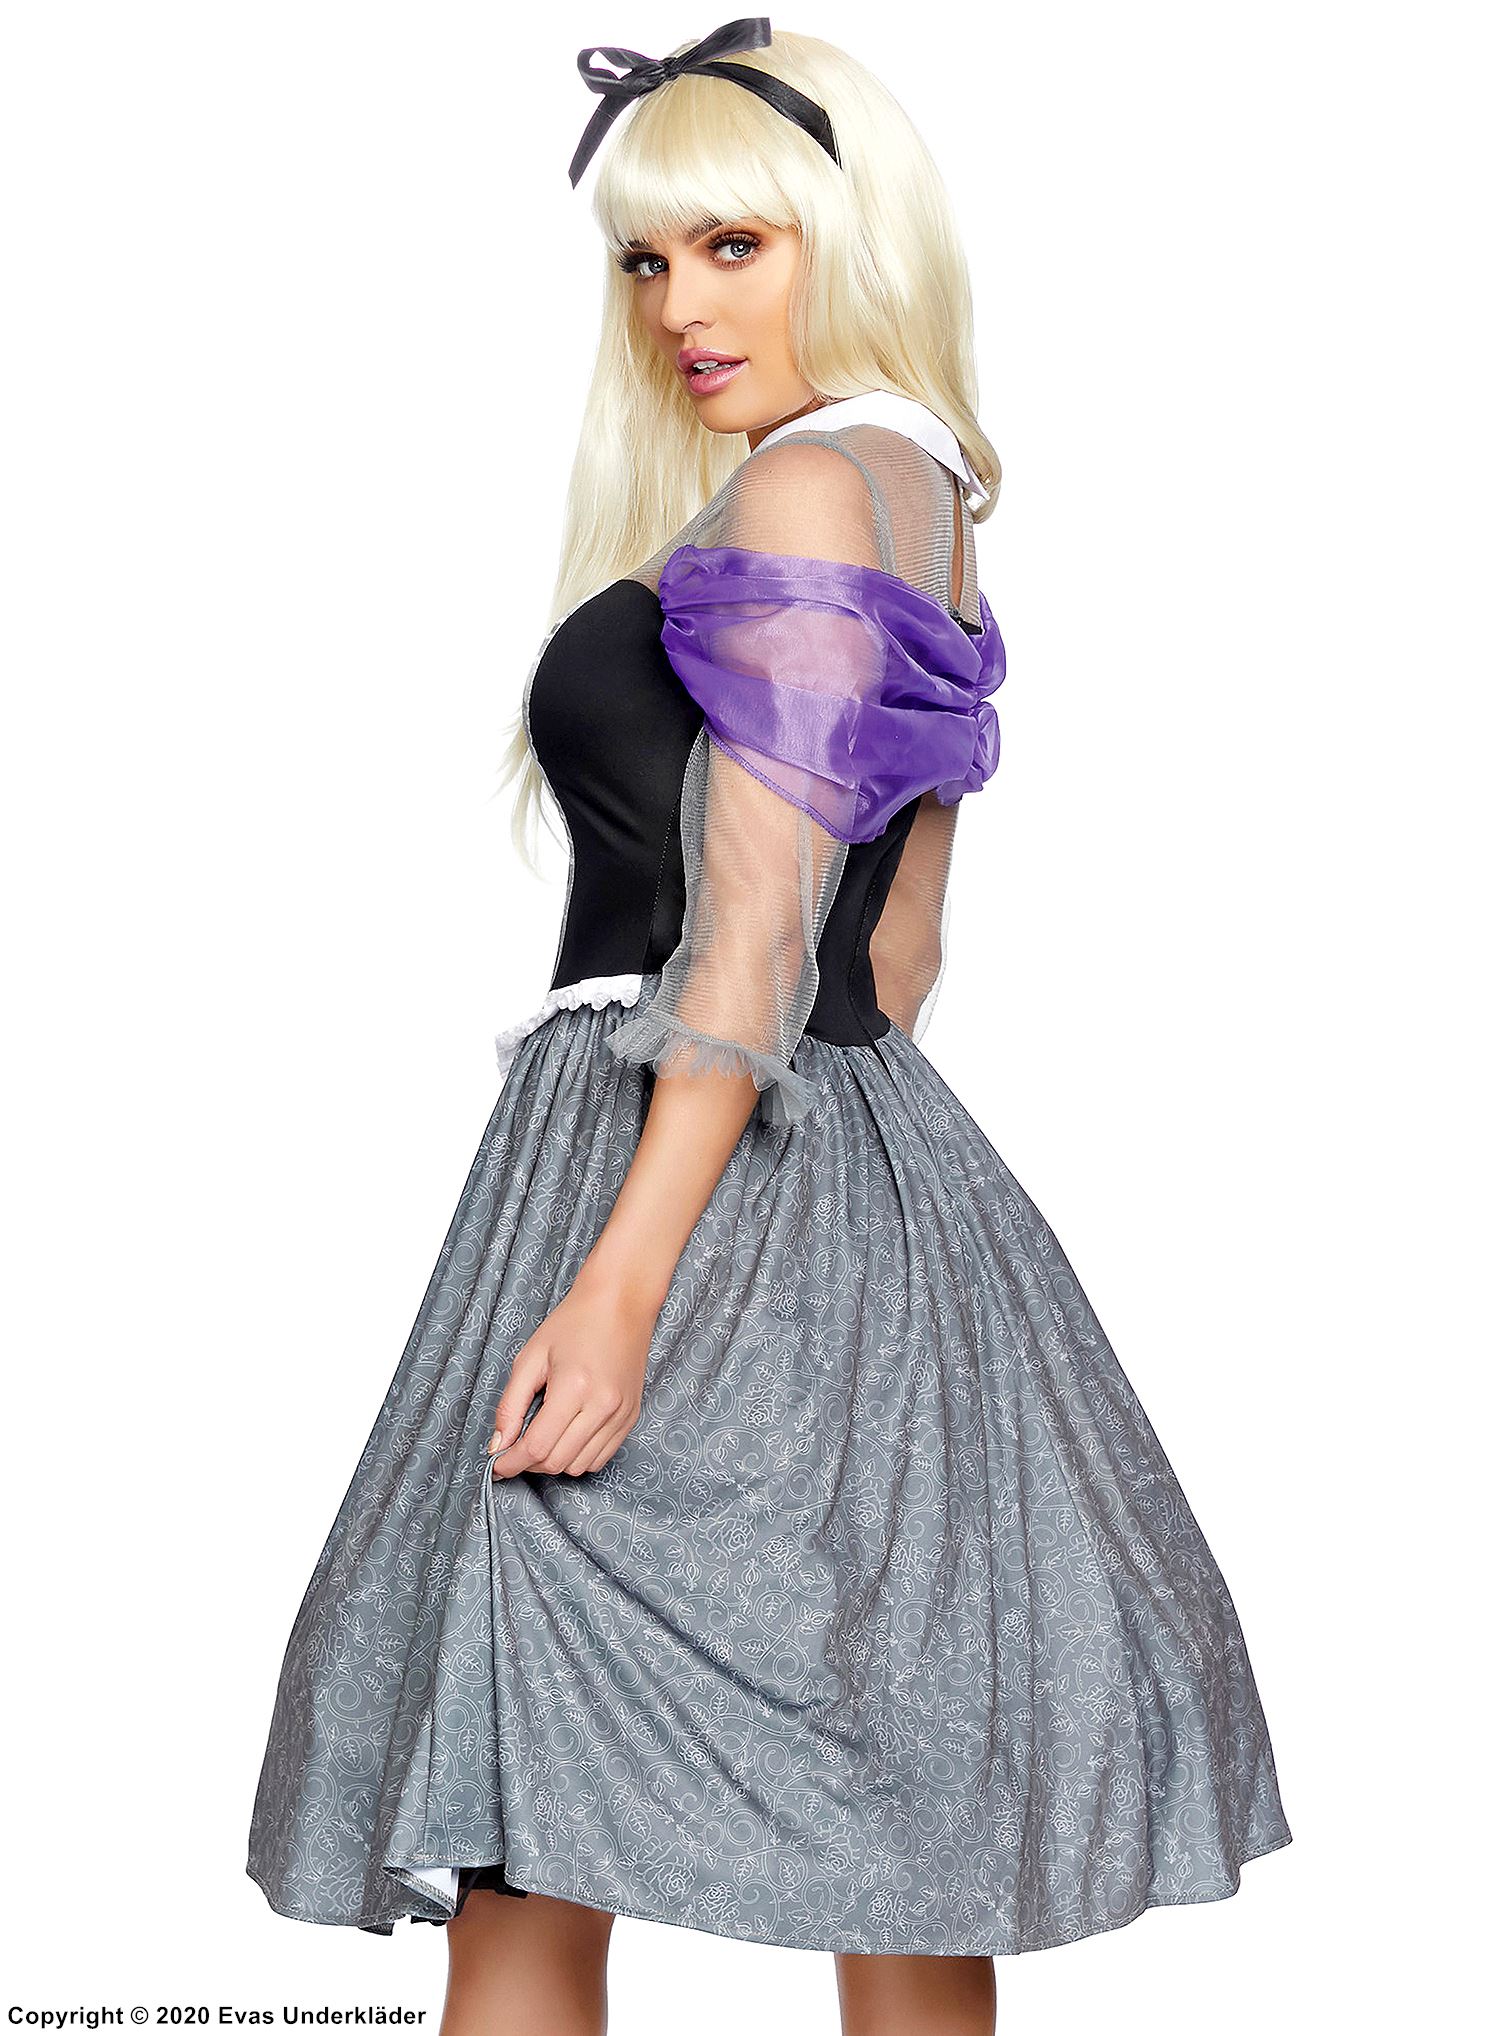 Princess Aurora from Sleeping Beauty, costume dress, sheer inlays, shirt collar